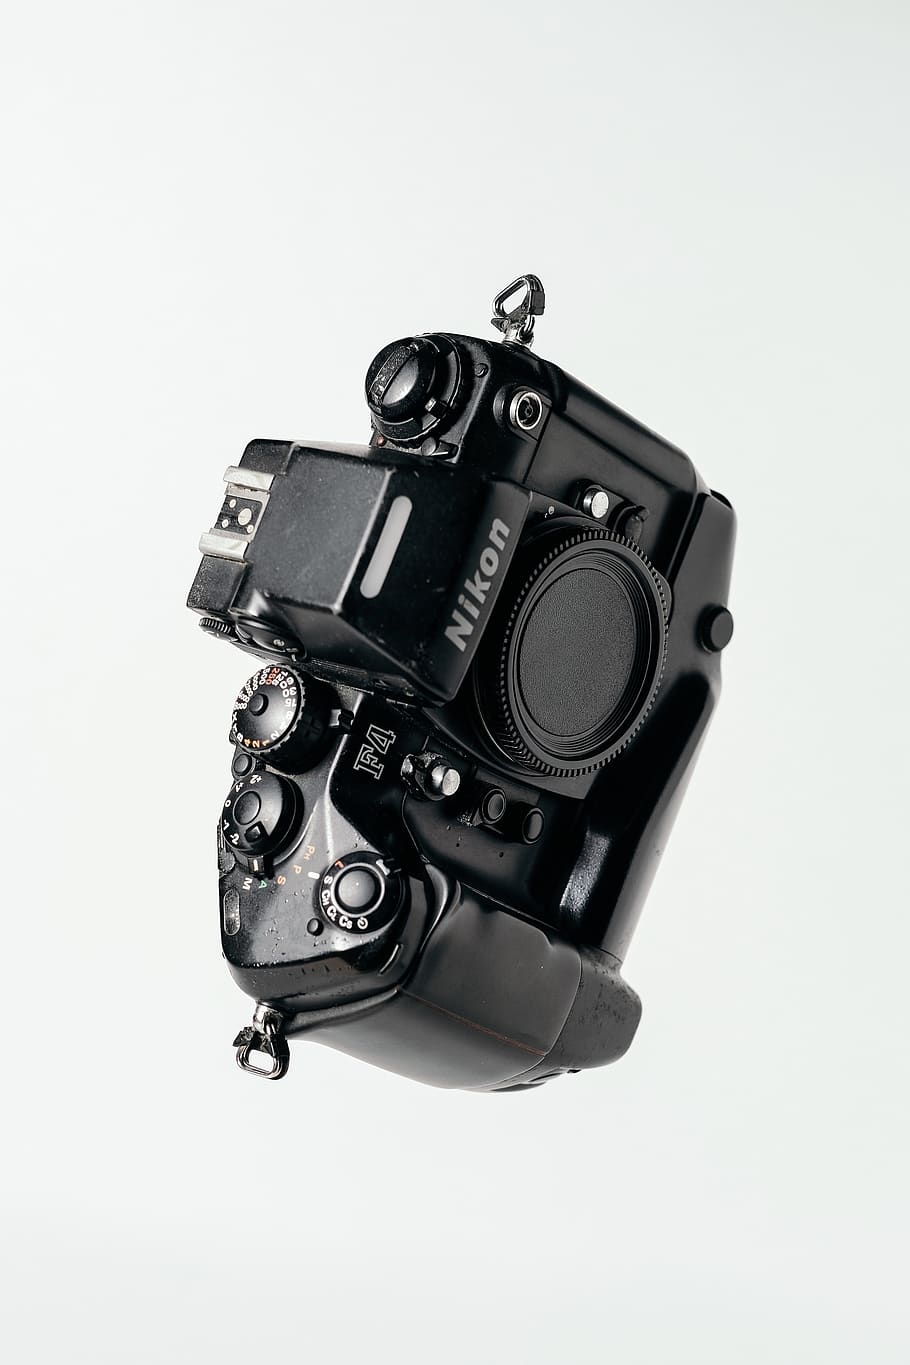 black Nikon DSLR camera on whit surface, studio shot, technology